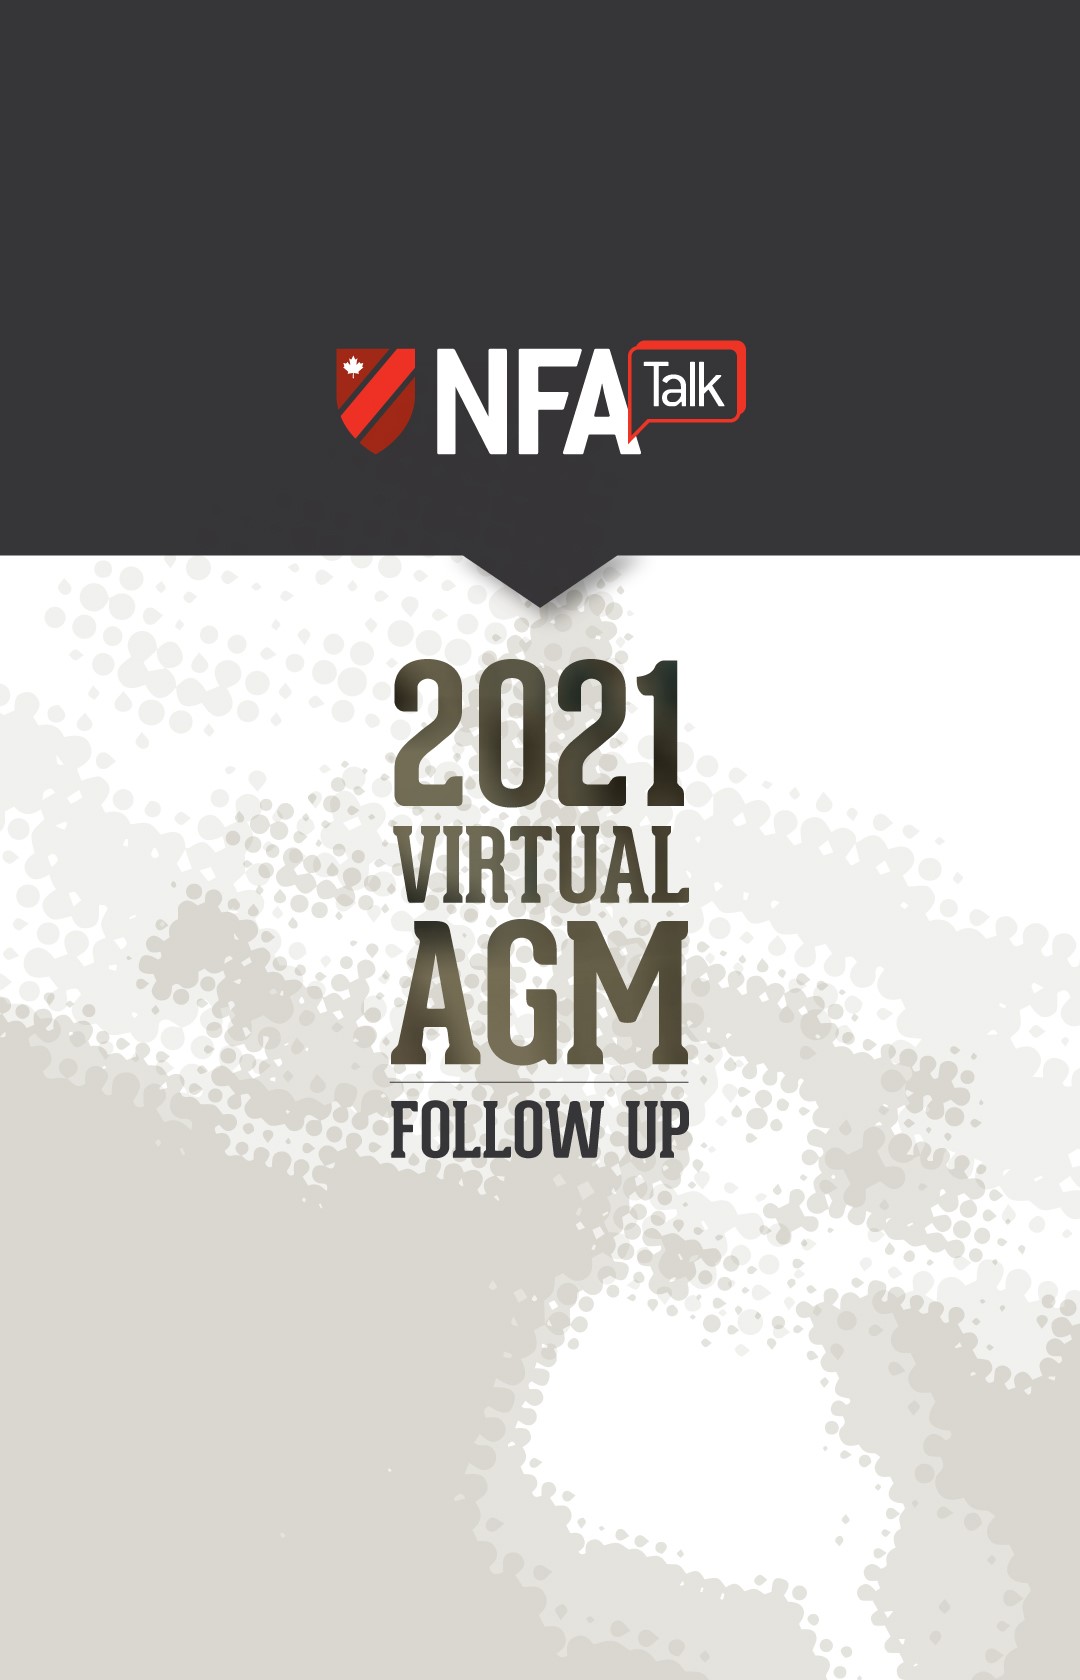 NFA Talk S2E10 - 2021 Virtual AGM Follow Up